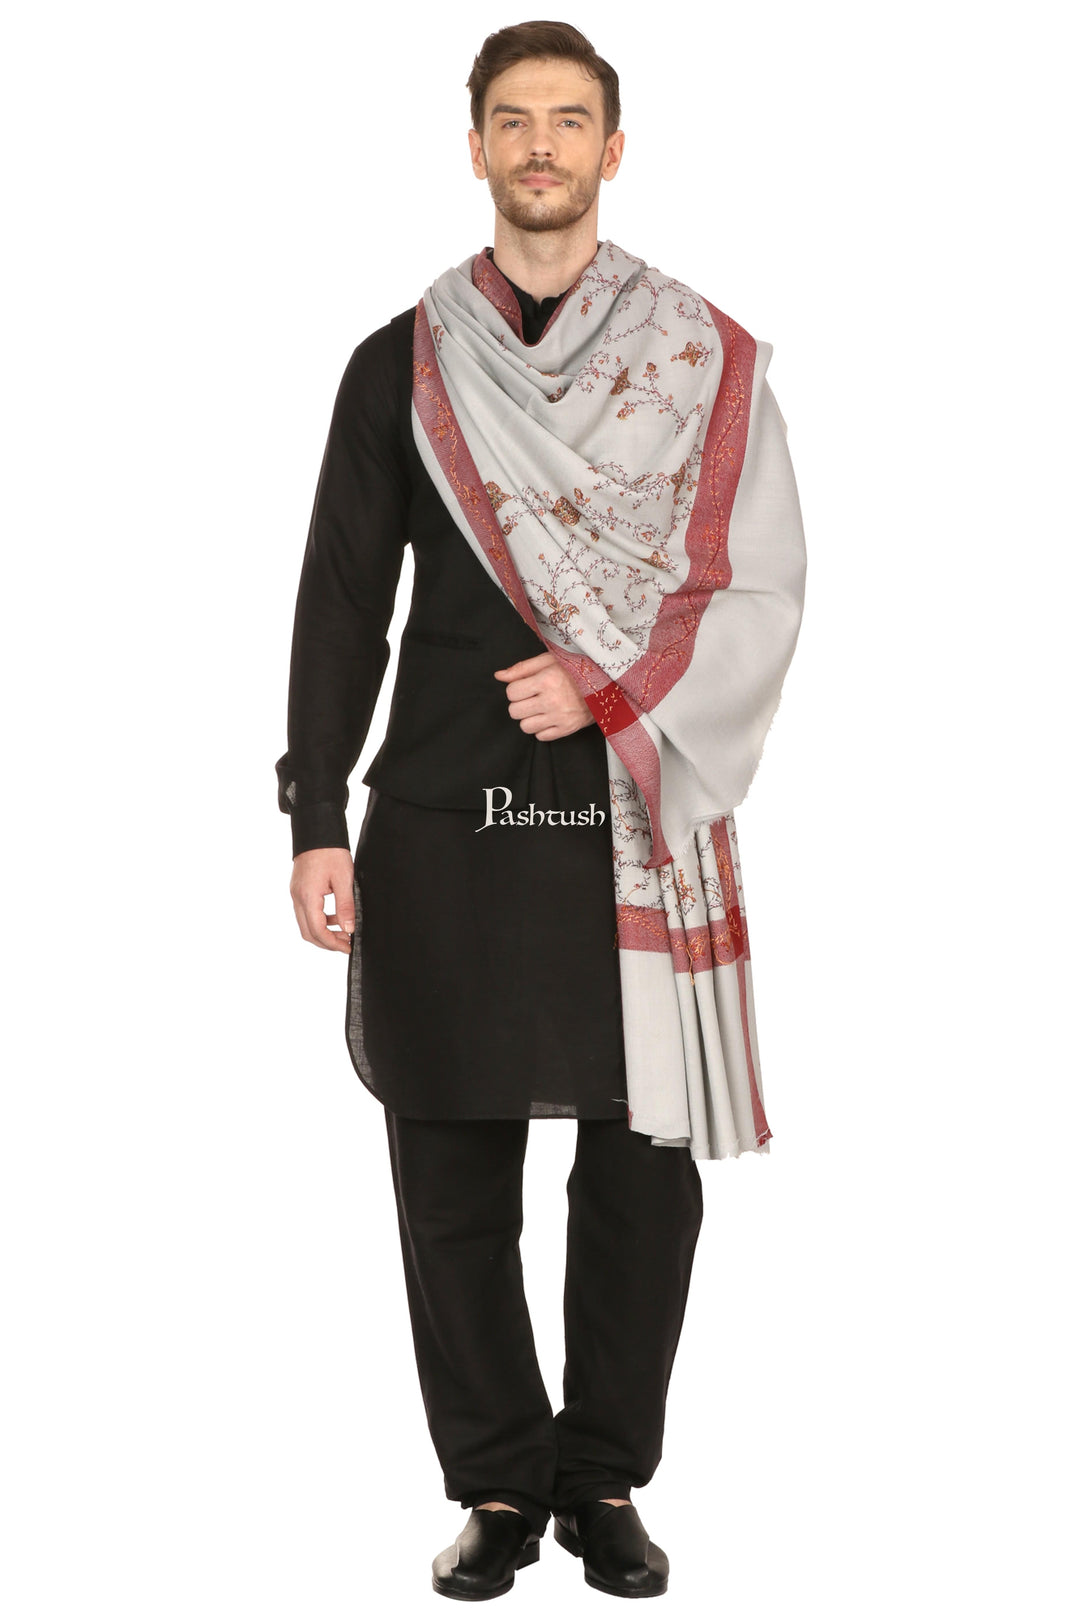 Pashtush India Mens Shawls Gents Shawl Pashtush Mens Hand Embroidery Shawl, Thick And Warm,Grey